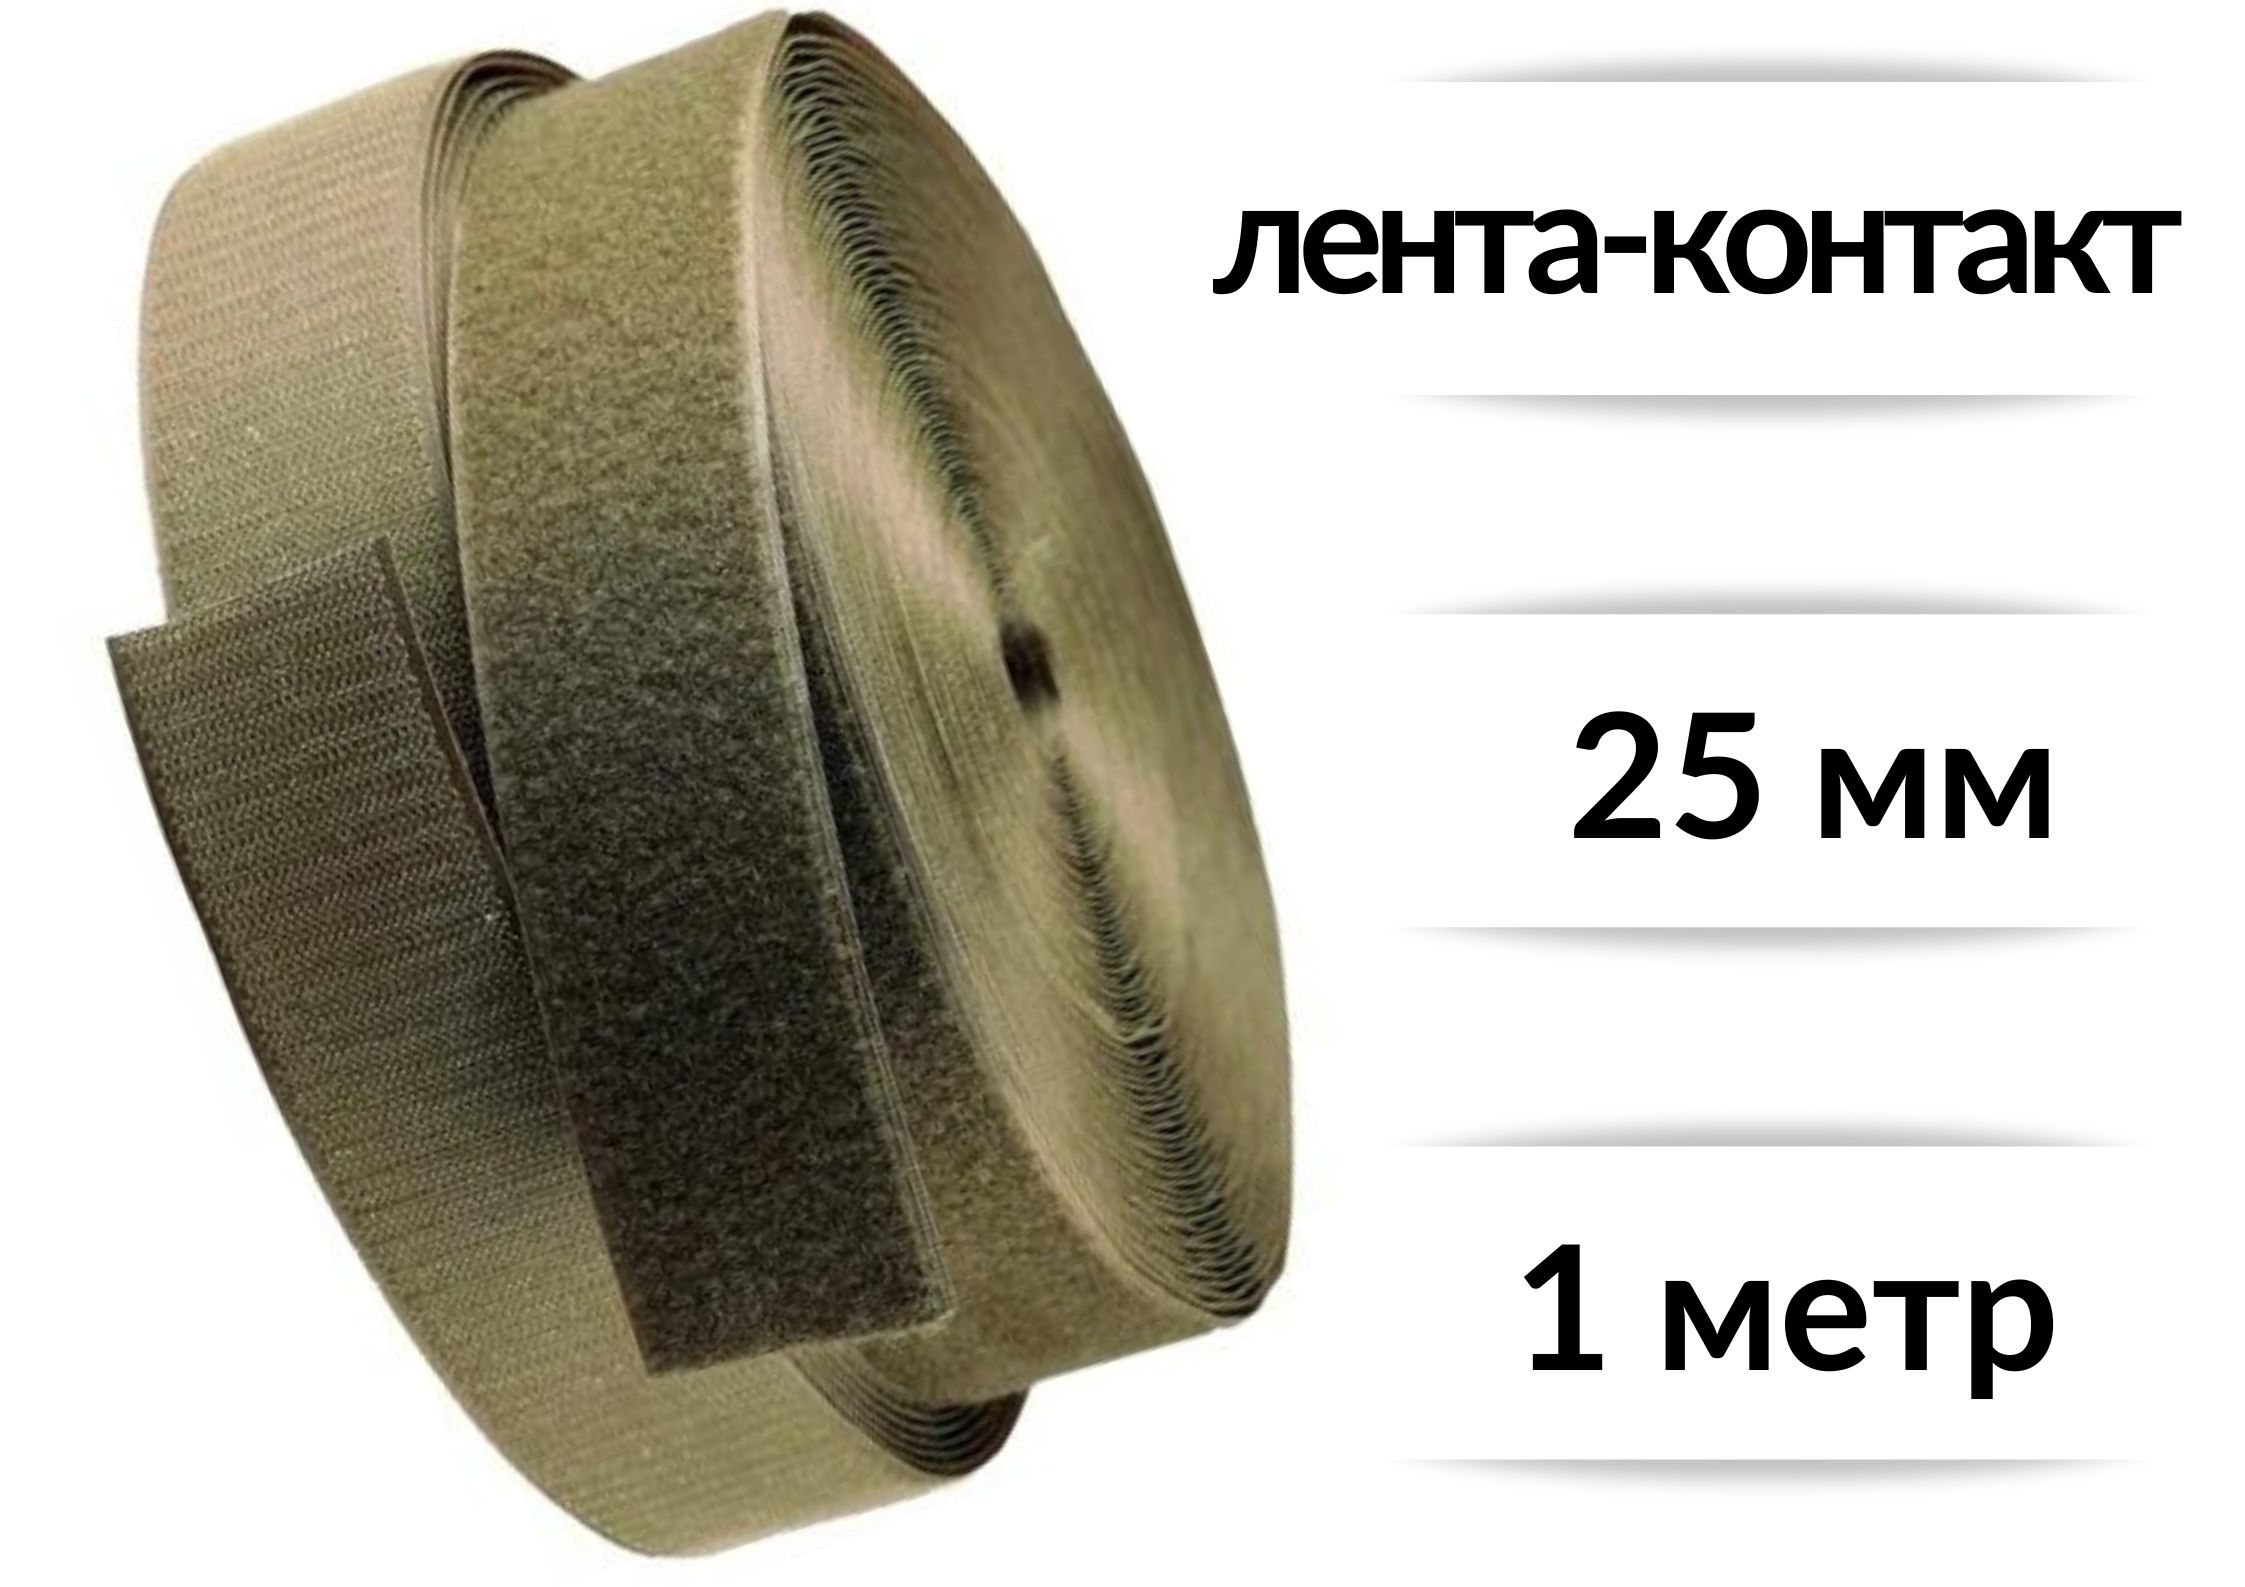 Лента контактная (липучка) пара петля и крючок, БытСервис, 25 мм*1 м, хаки